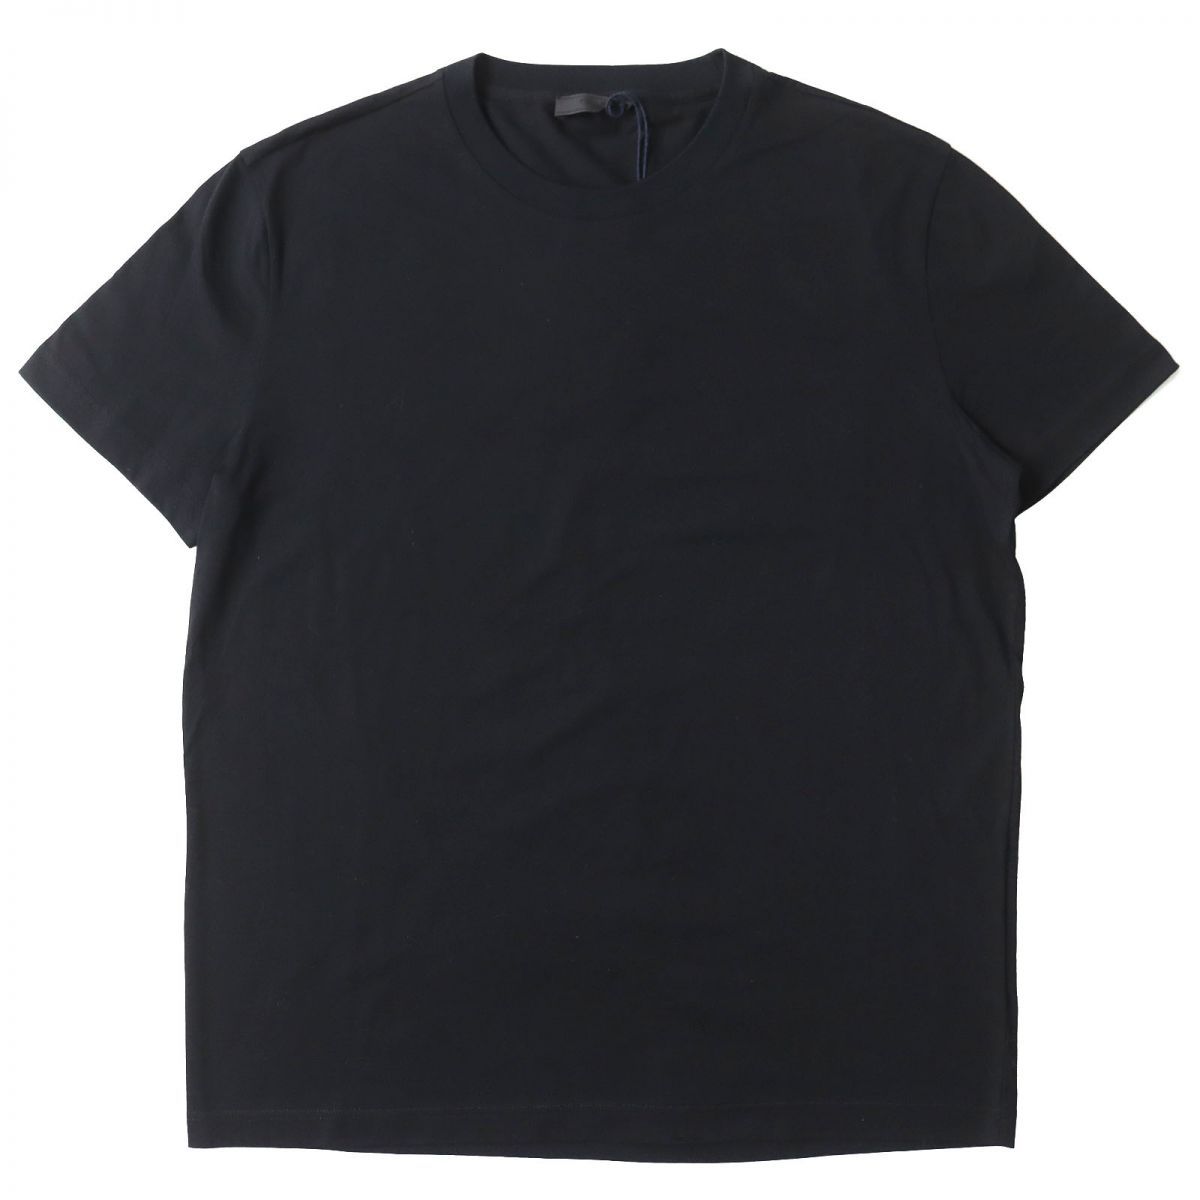 Tシャツ/カットソー(半袖/袖なし)プラダGIROCOLLO M/C JERSEY HELICOPTER Sサイズ